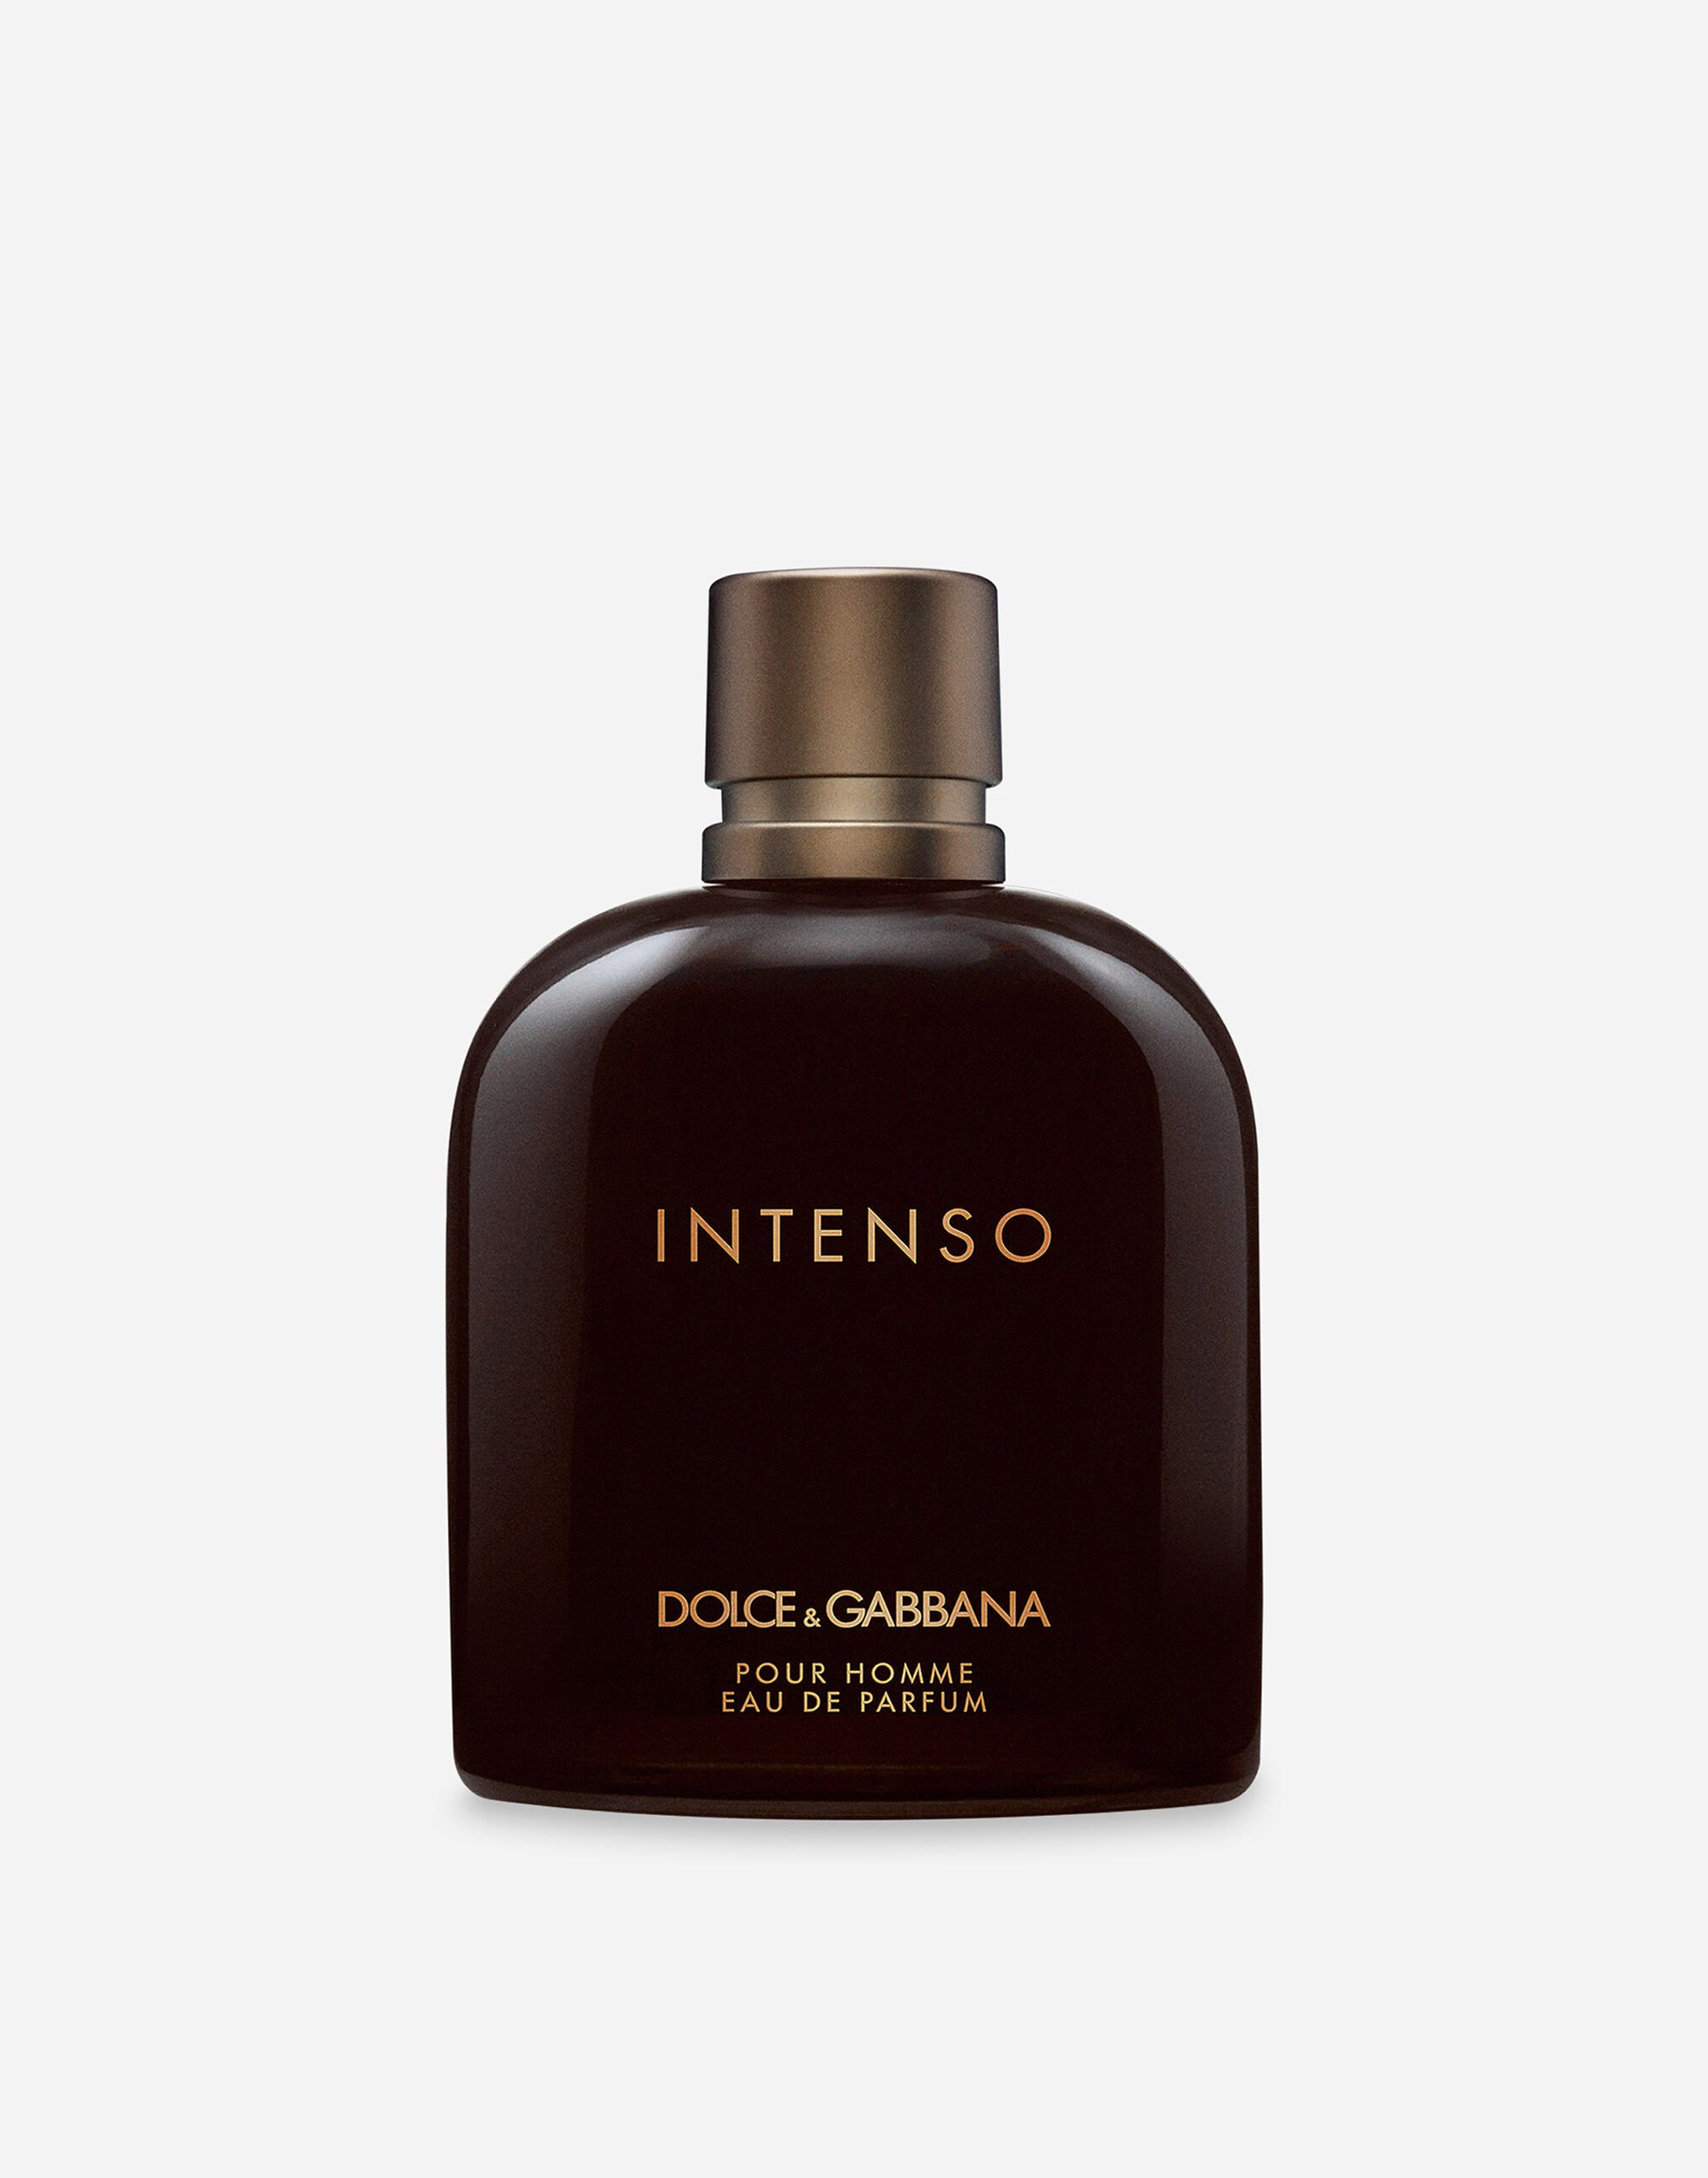 Dolce & Gabbana Intenso Eau de Parfum - VP6974VP243